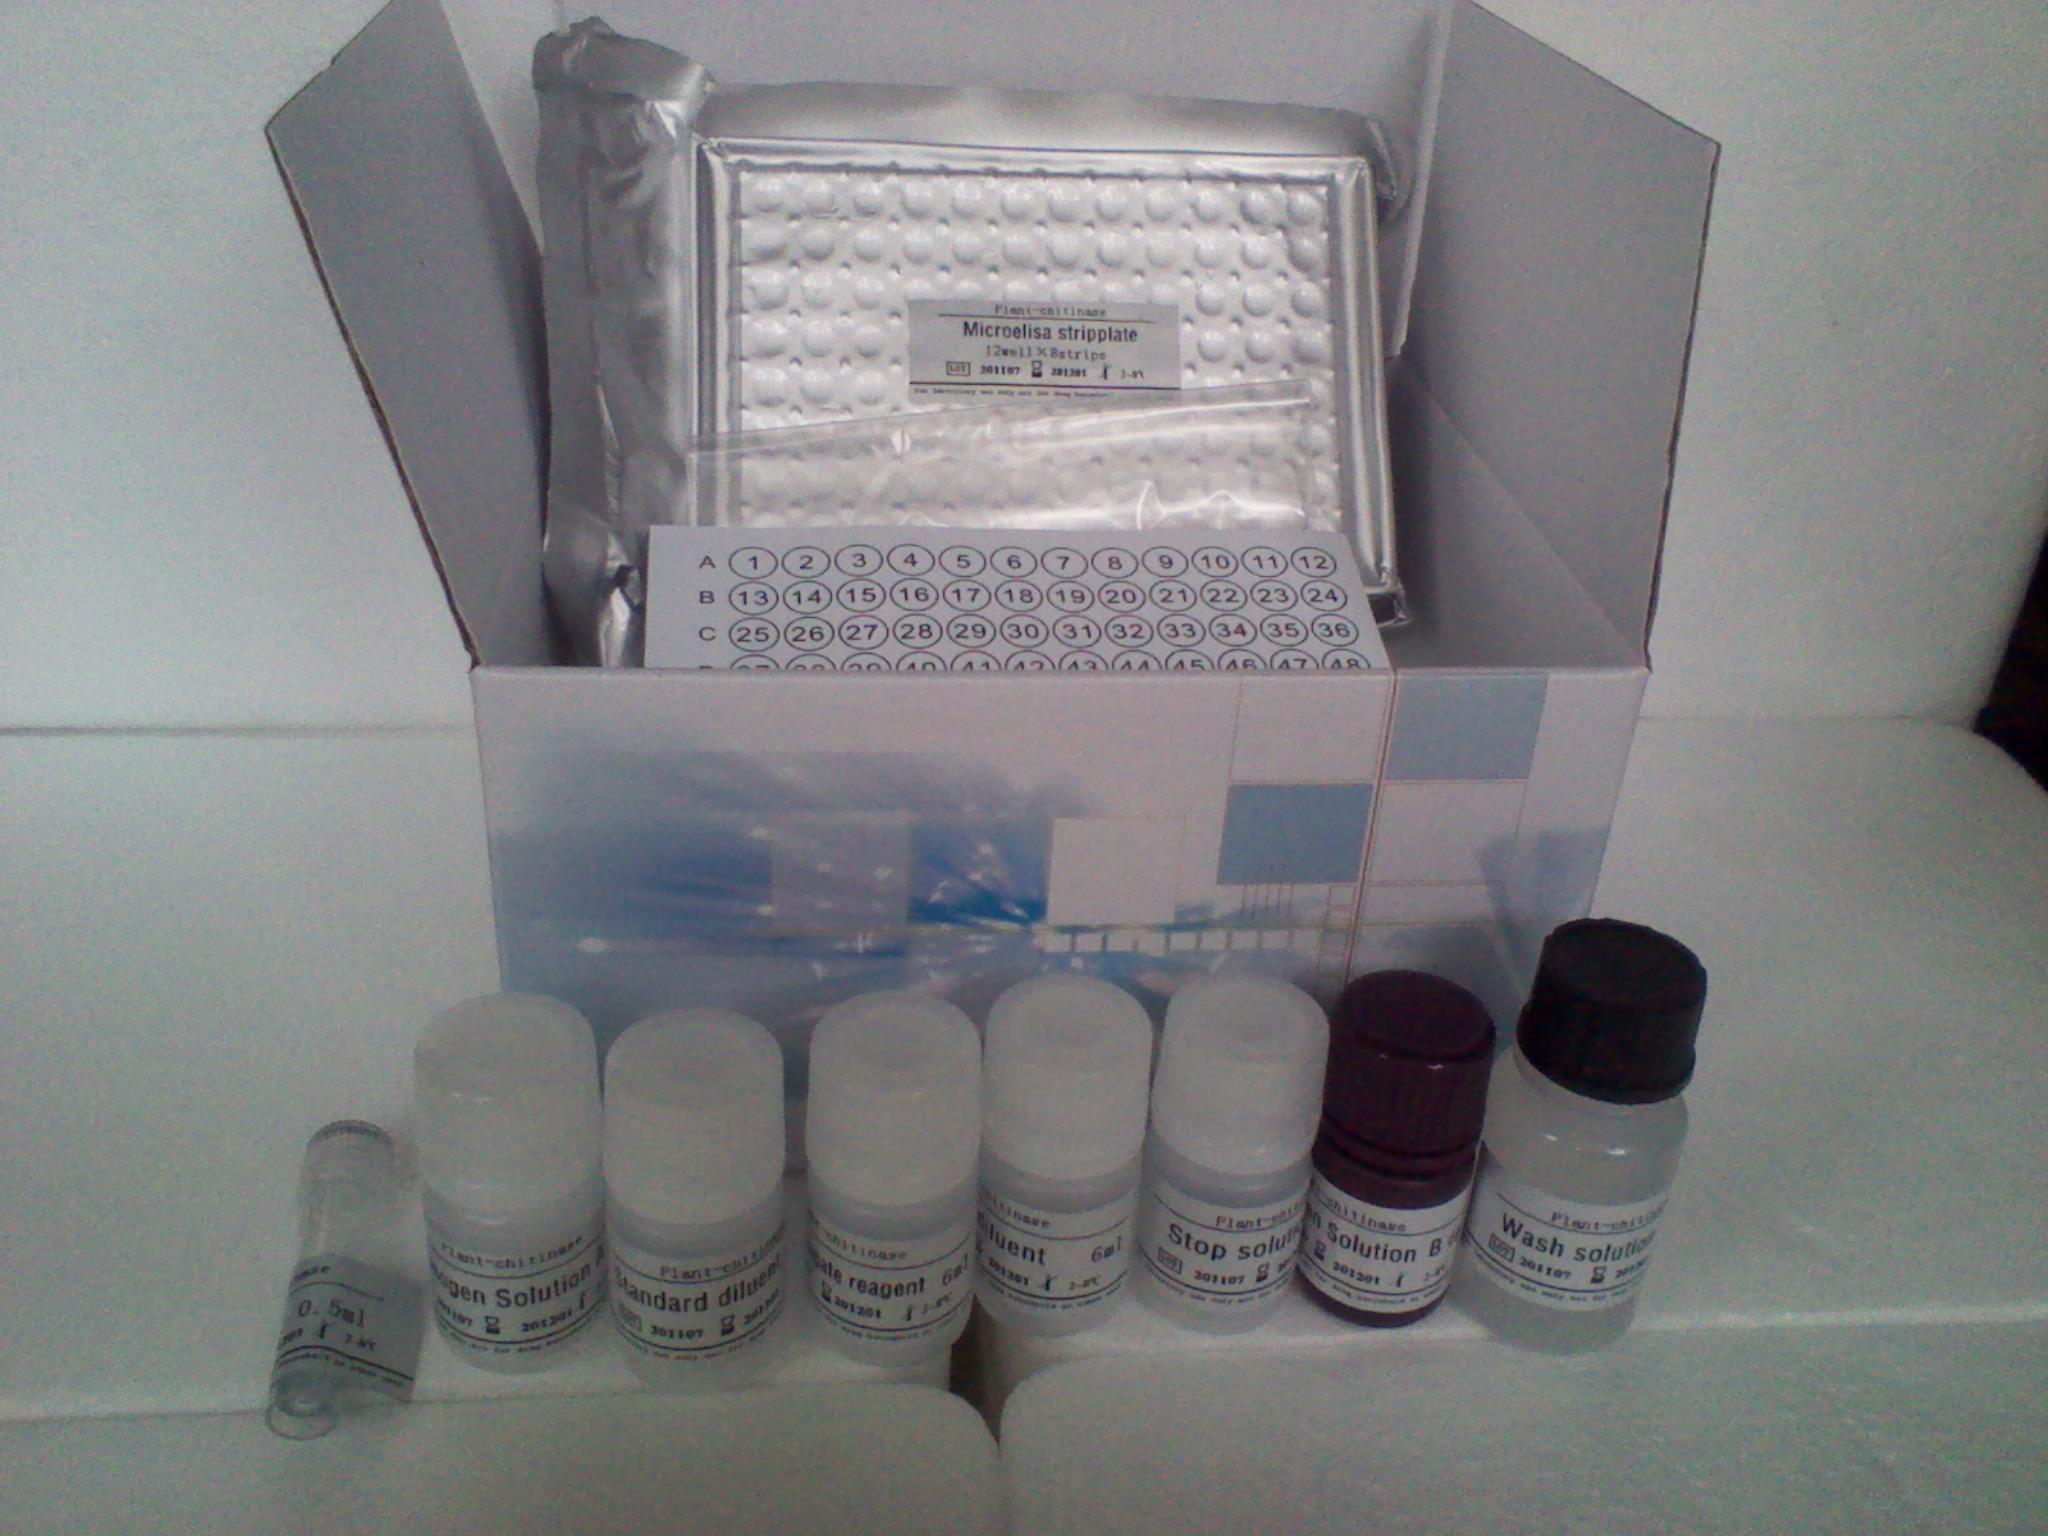 大鼠白细胞介素8（IL-8）elisa试剂盒